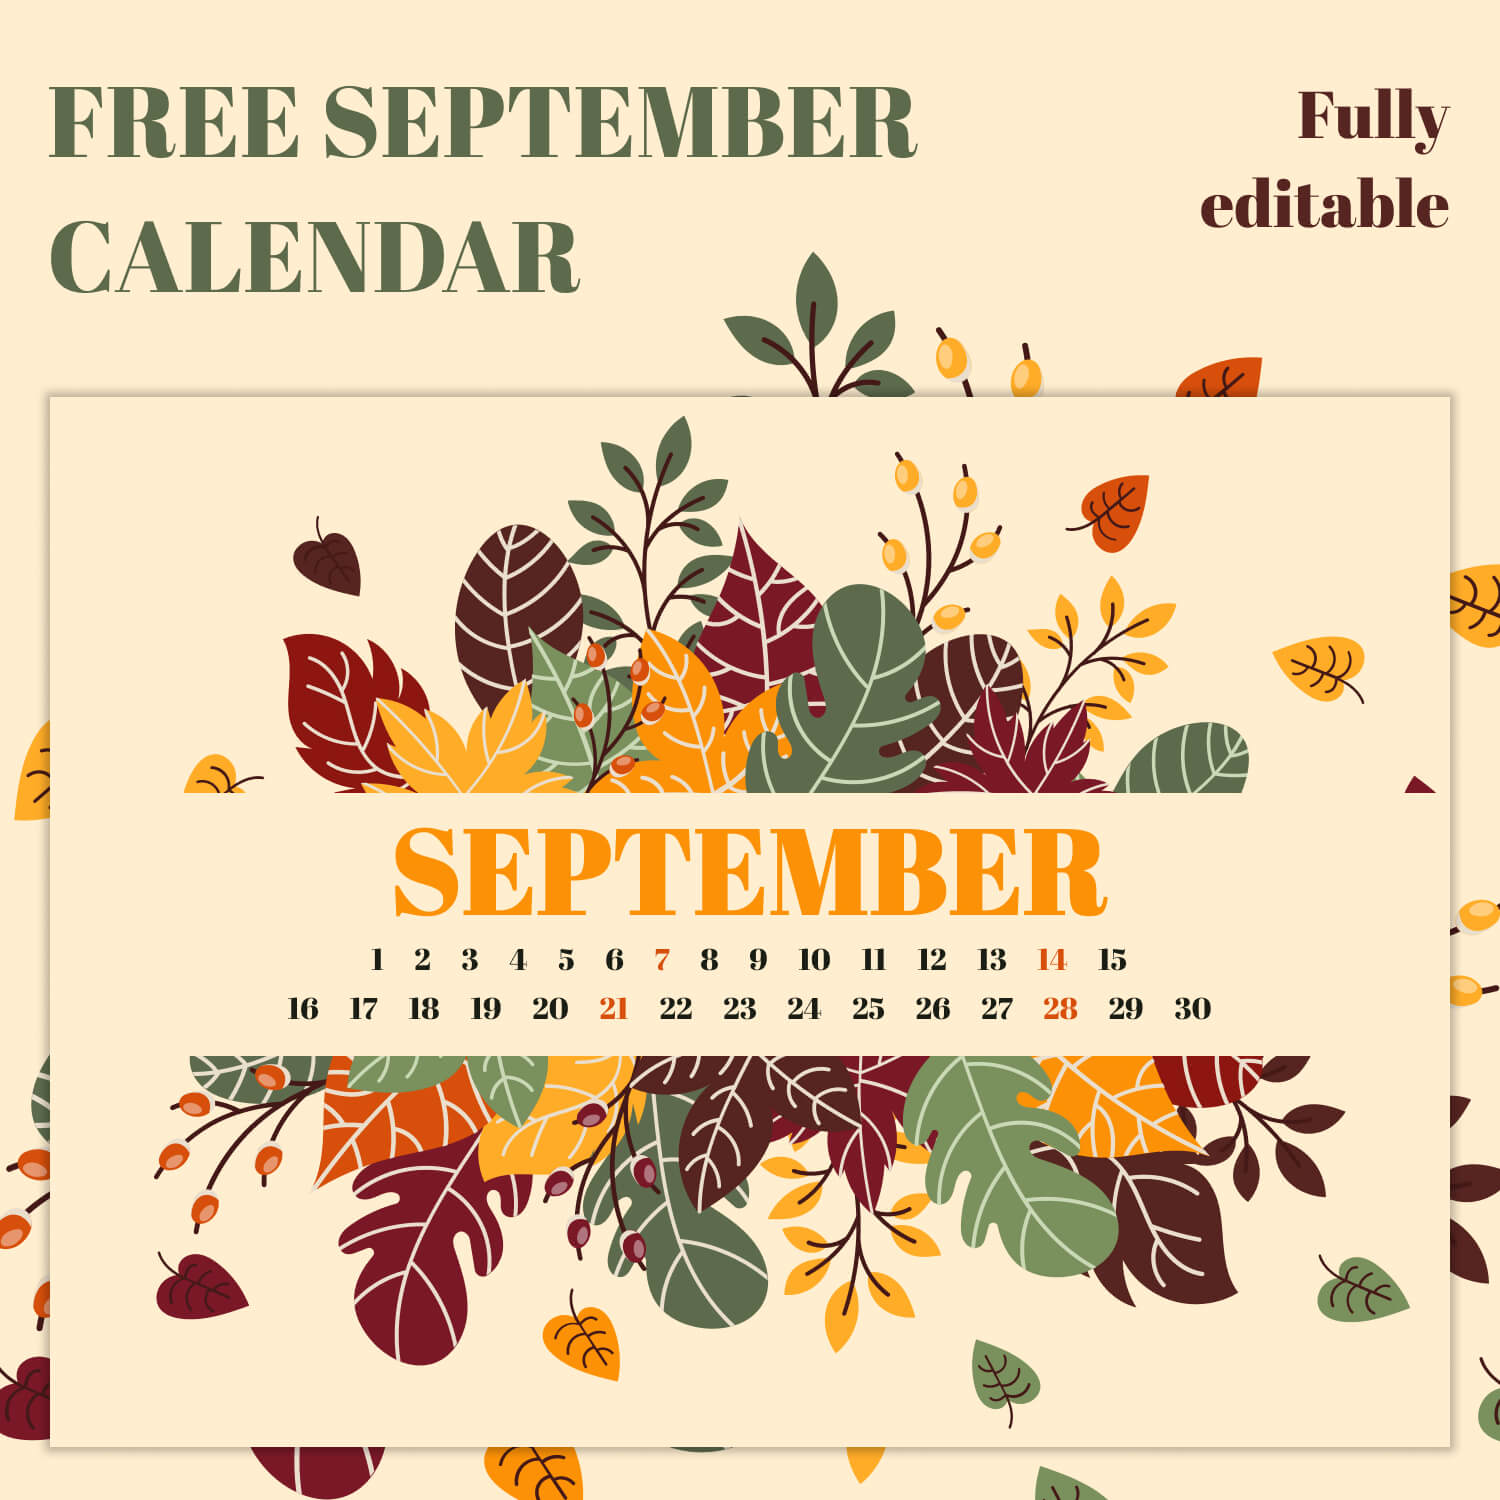 Free Editable Fall Leaves September Printable Calendar Cover Image.